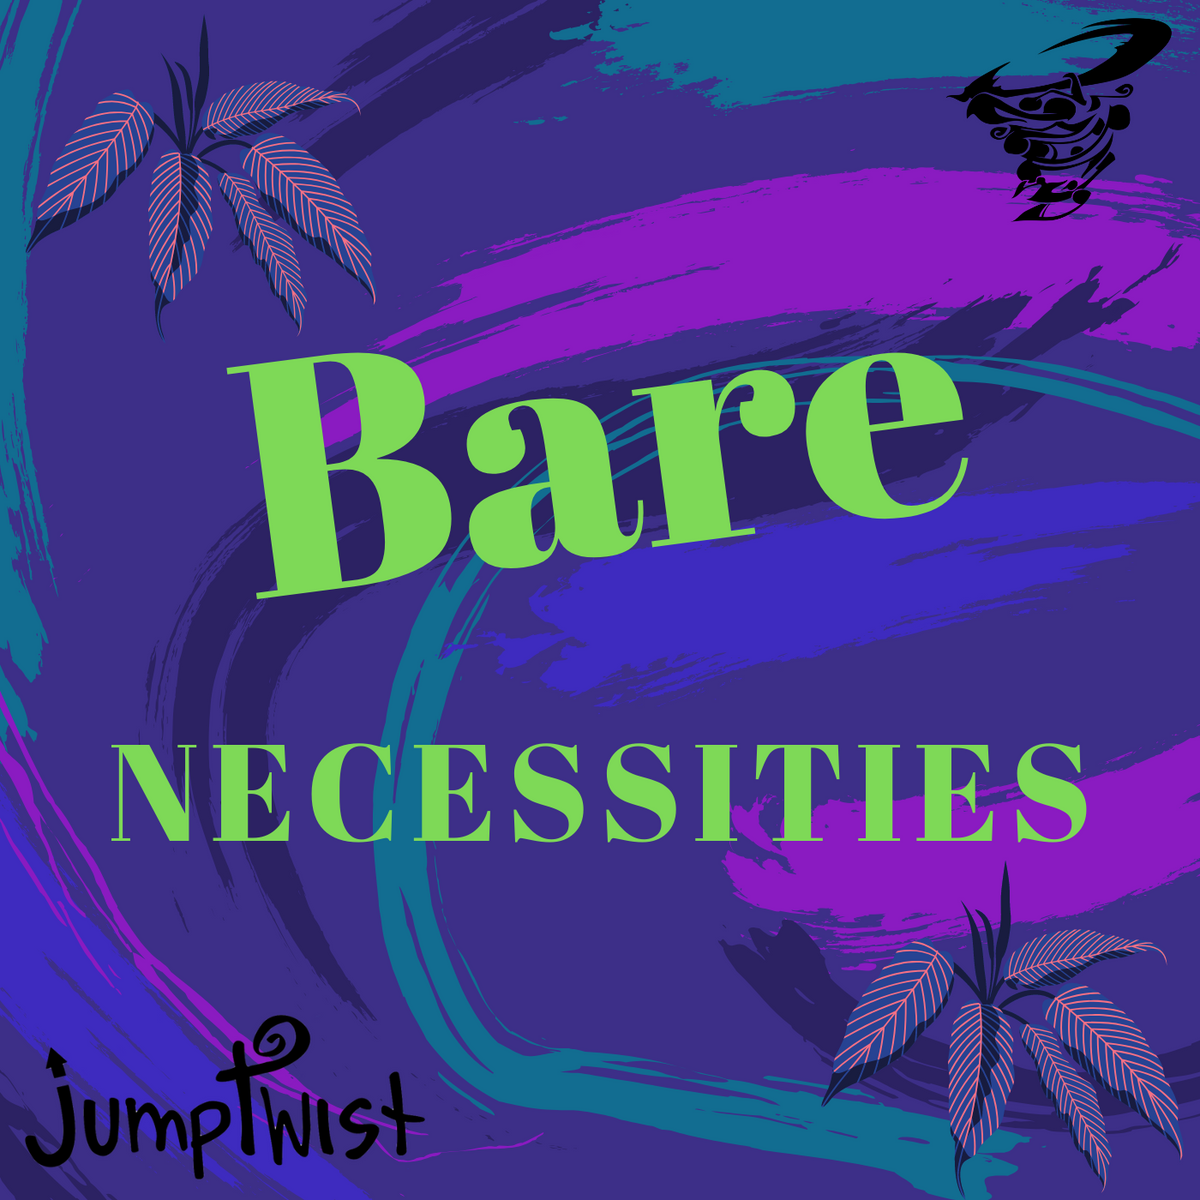 Bare Necessities – Jumptwist